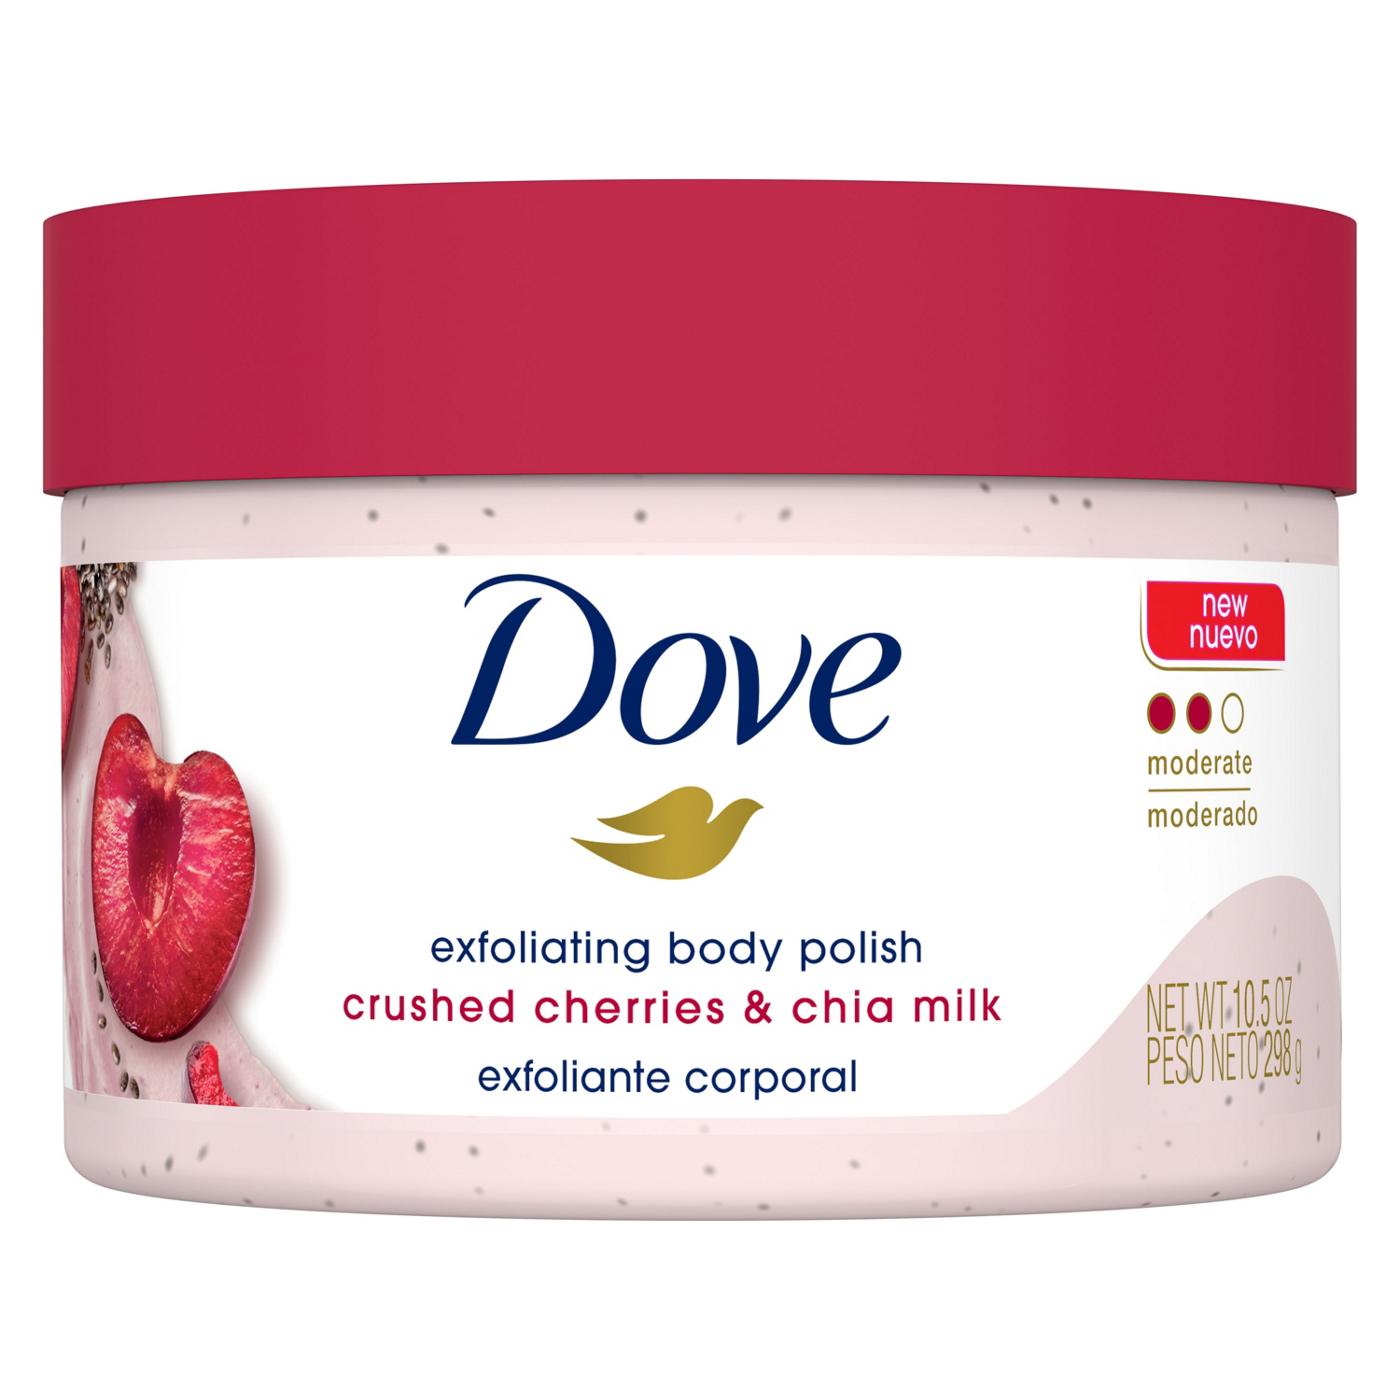 Dove Exfoliating Body Polish Crushed Cherries & Chia Milk; image 1 of 8